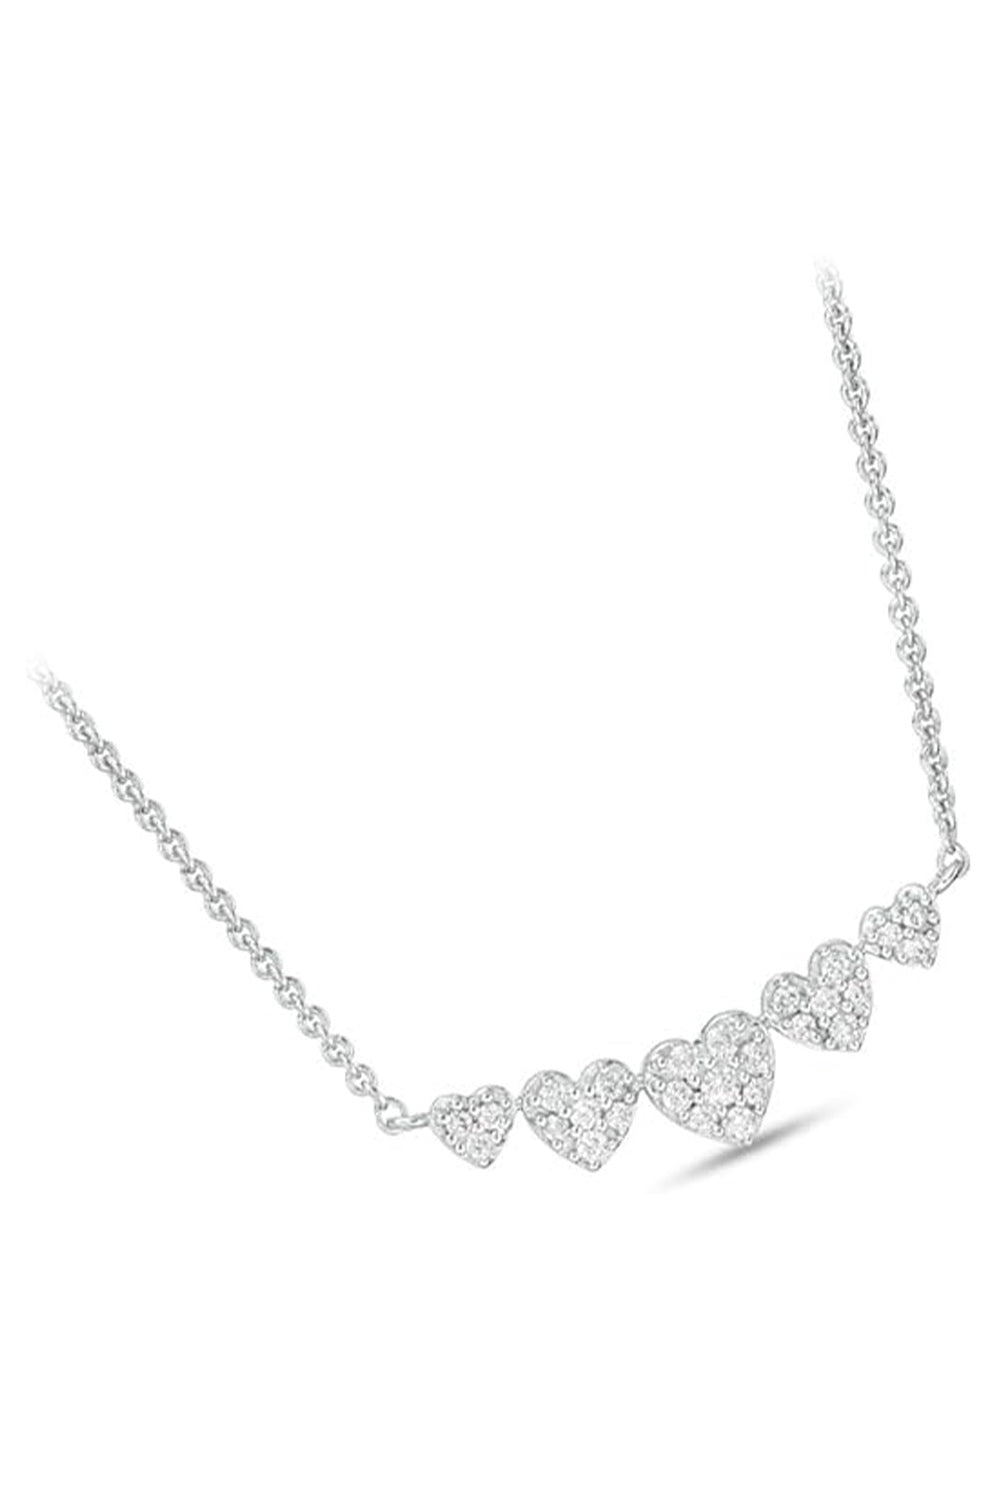 White Gold Color Five Heart Bar Pendant Necklace